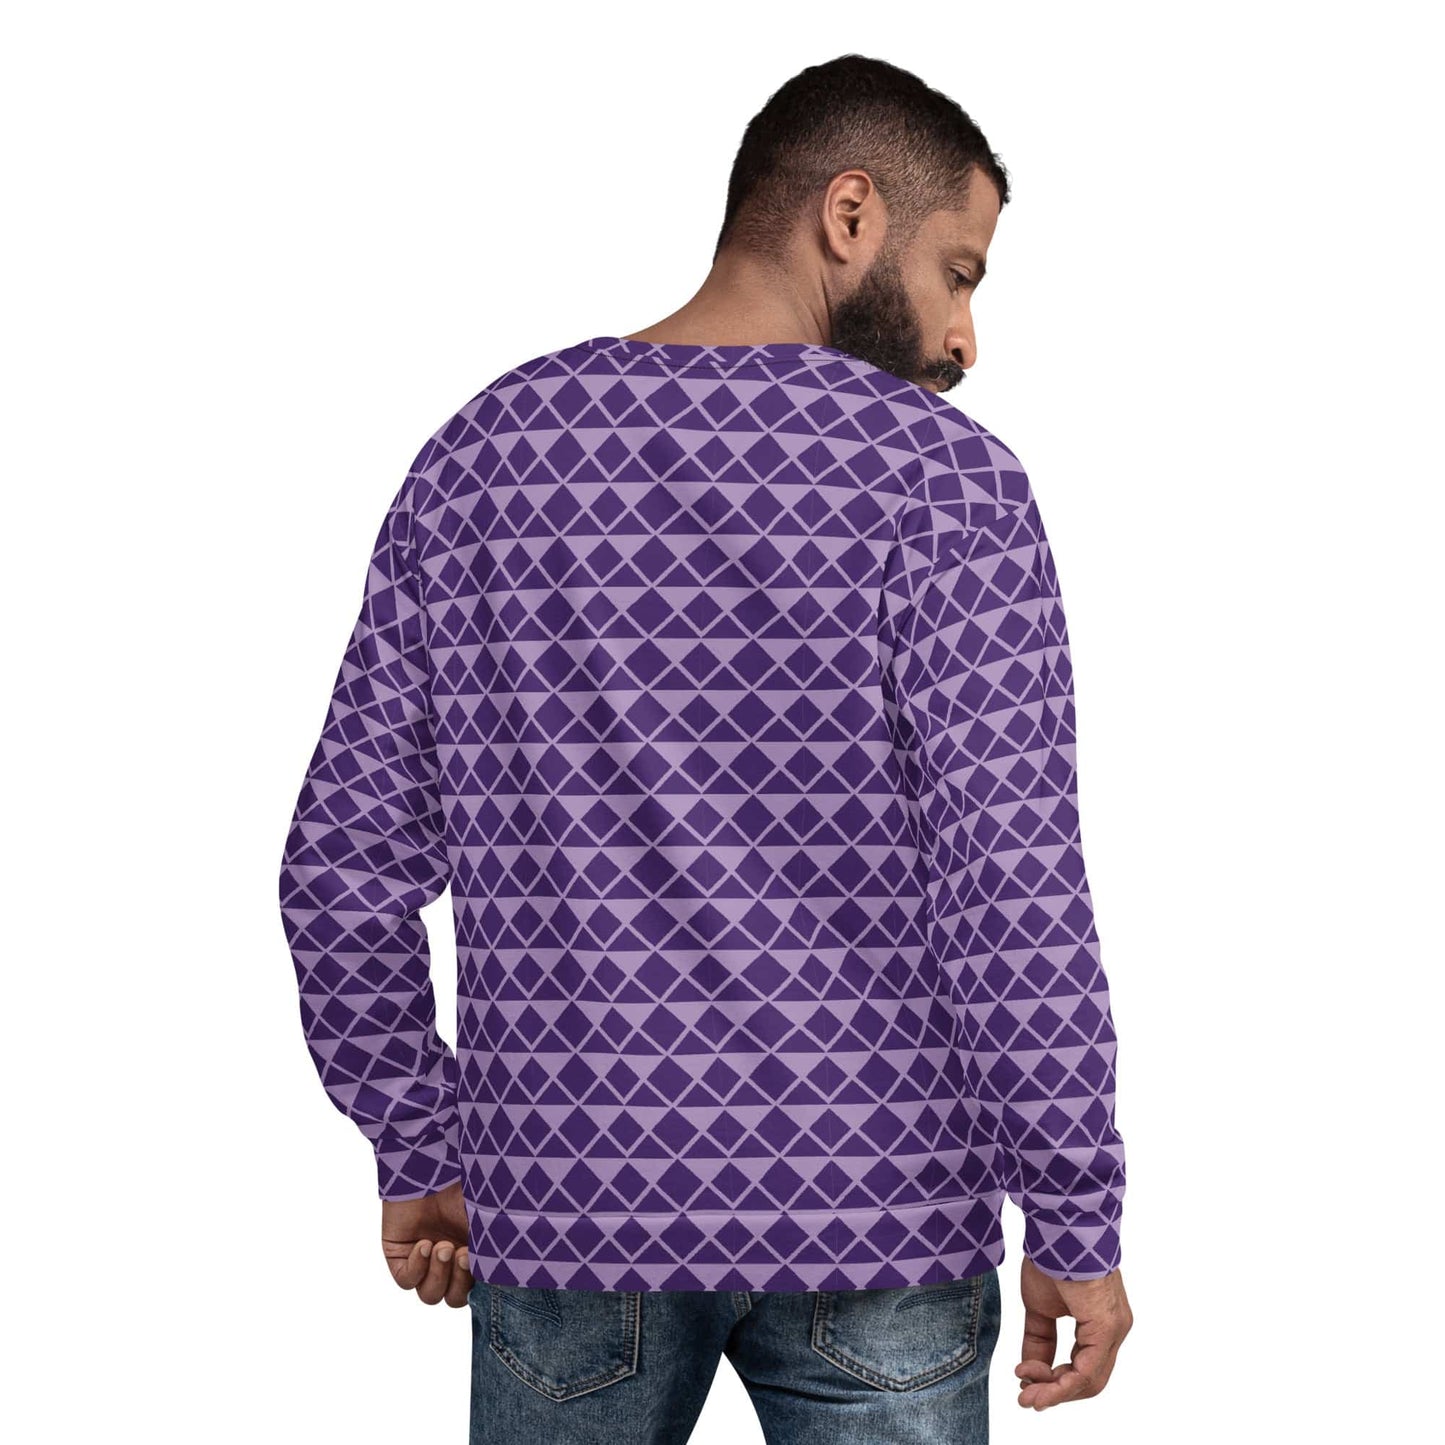 Joker Unisex Sweatshirt